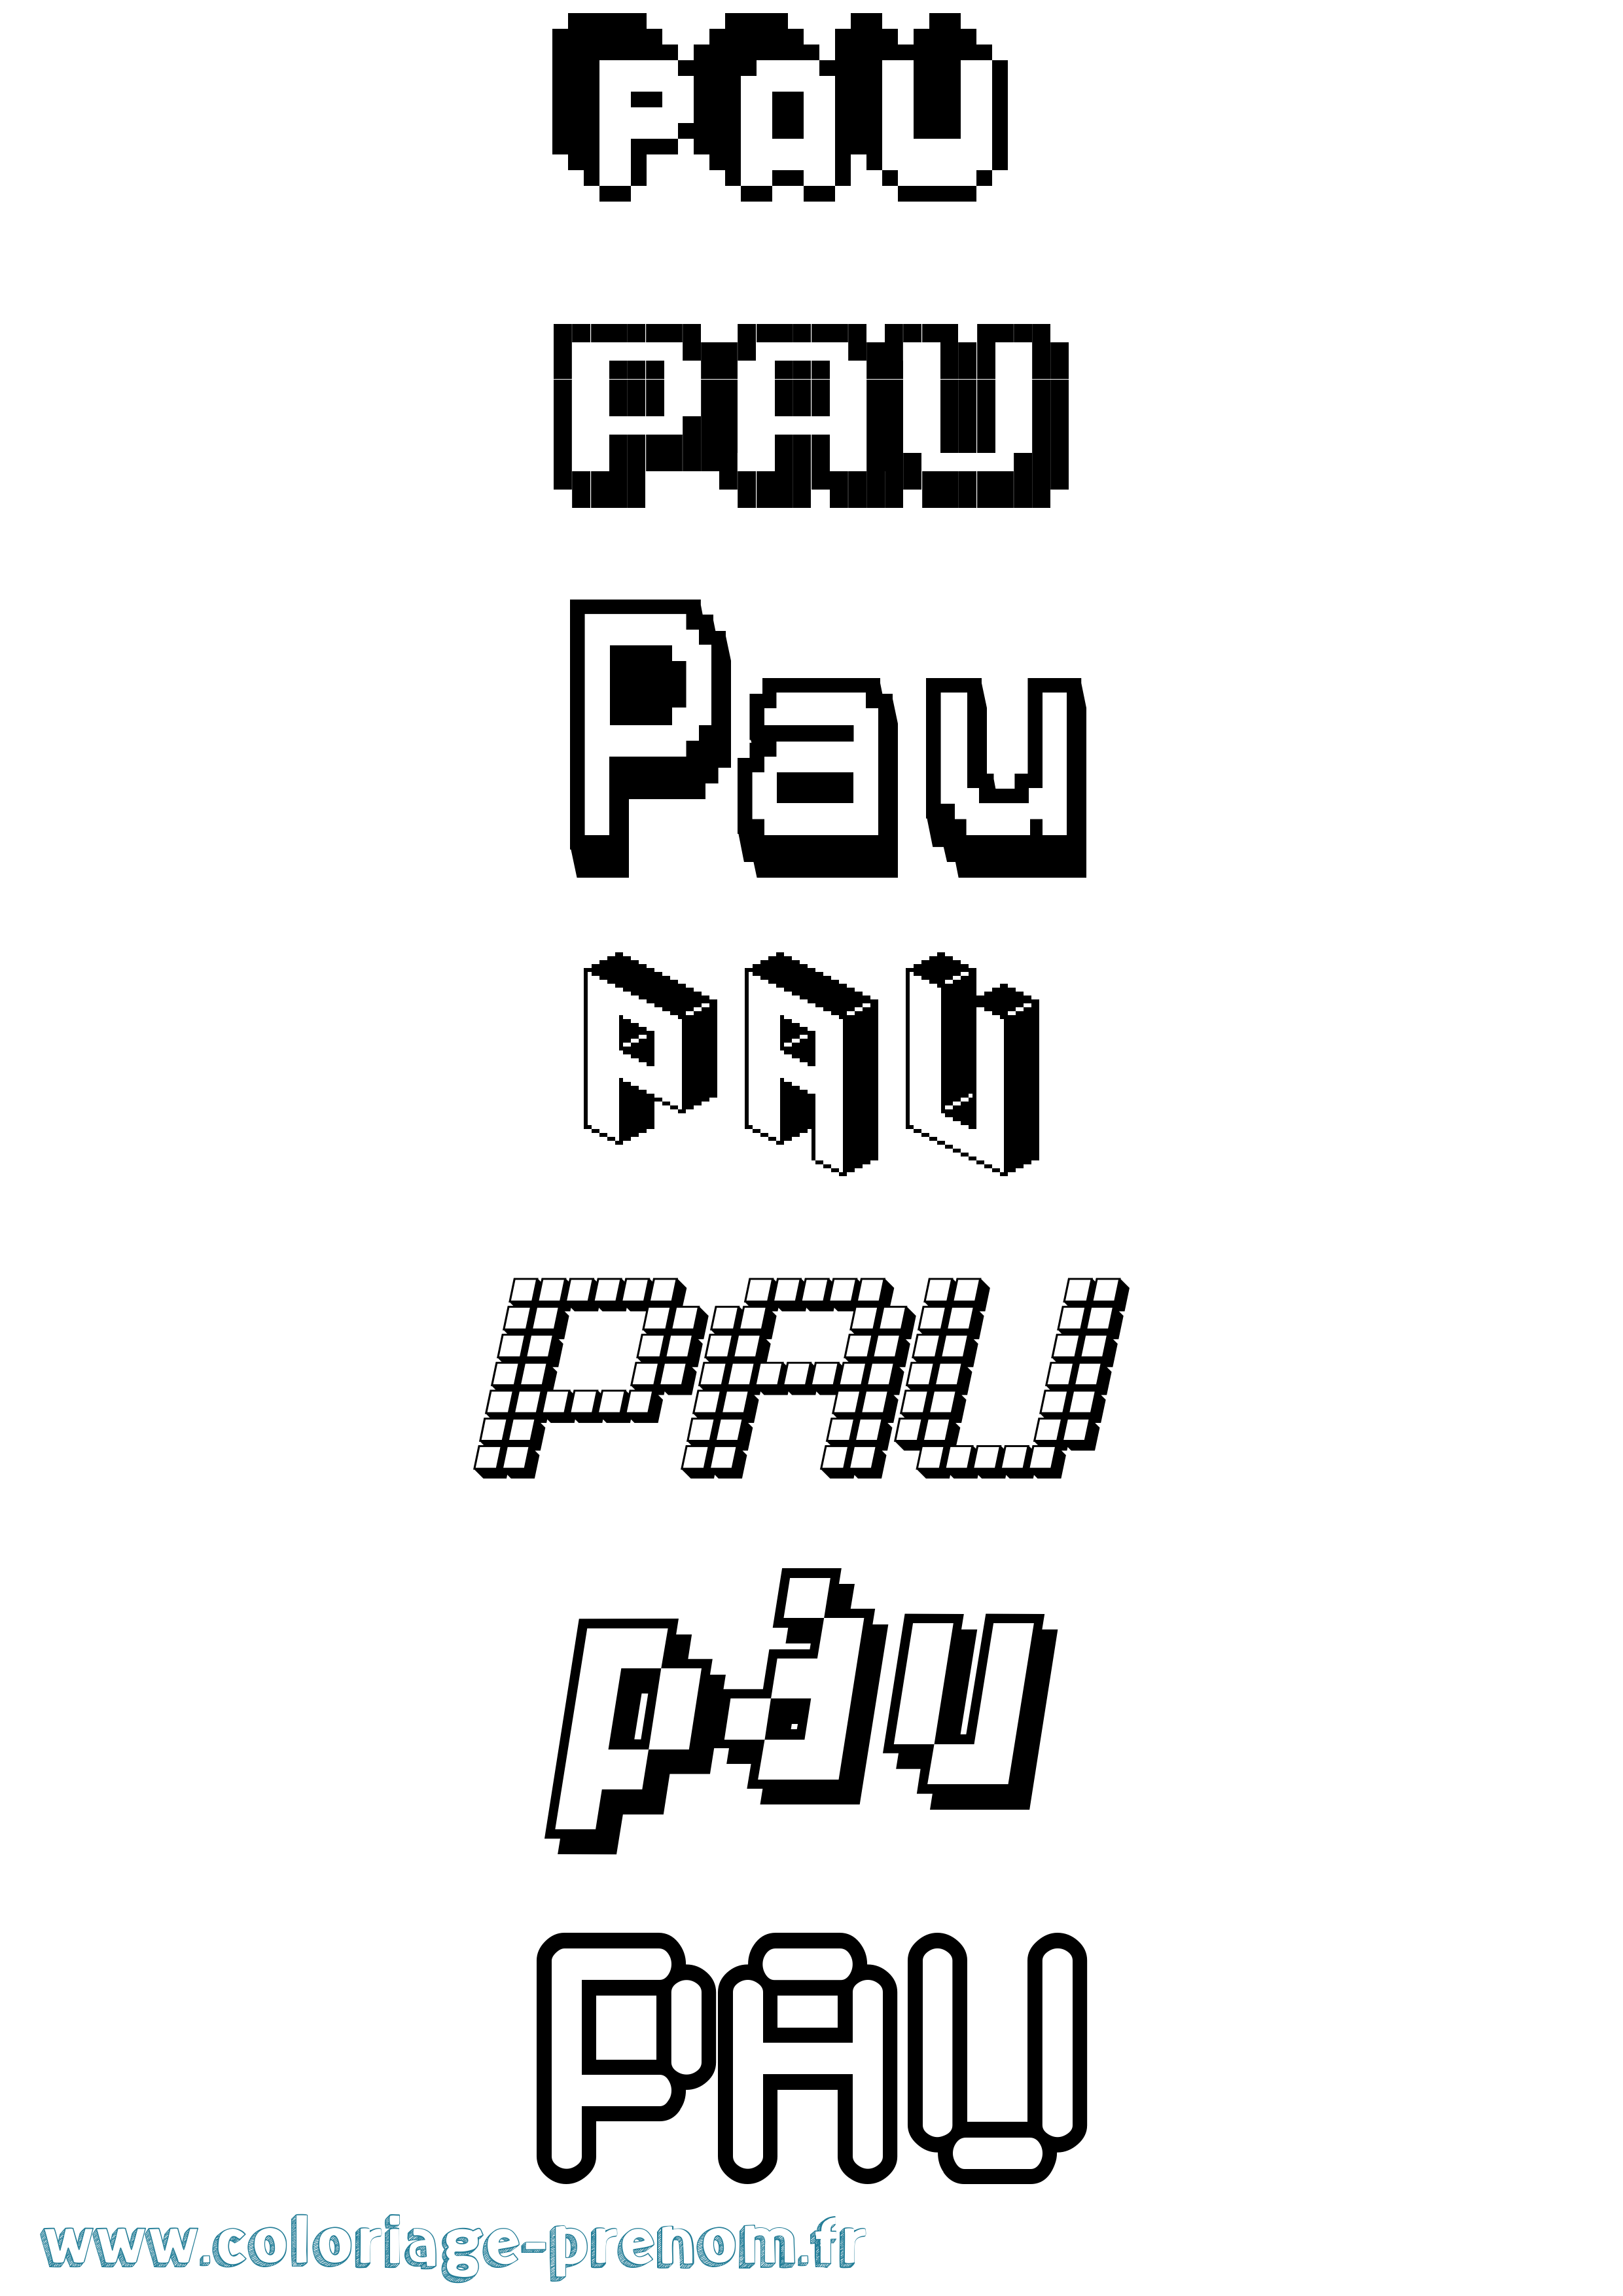 Coloriage prénom Pau Pixel